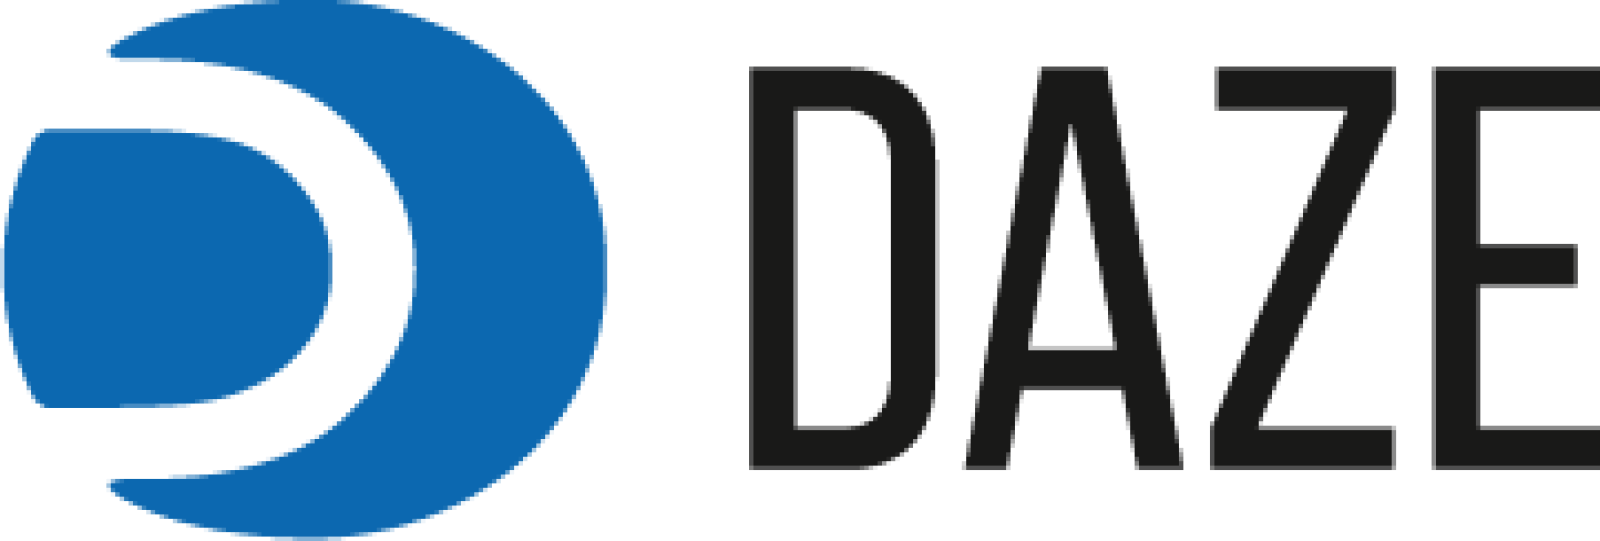 Logo DazeTechnology s.r.l.